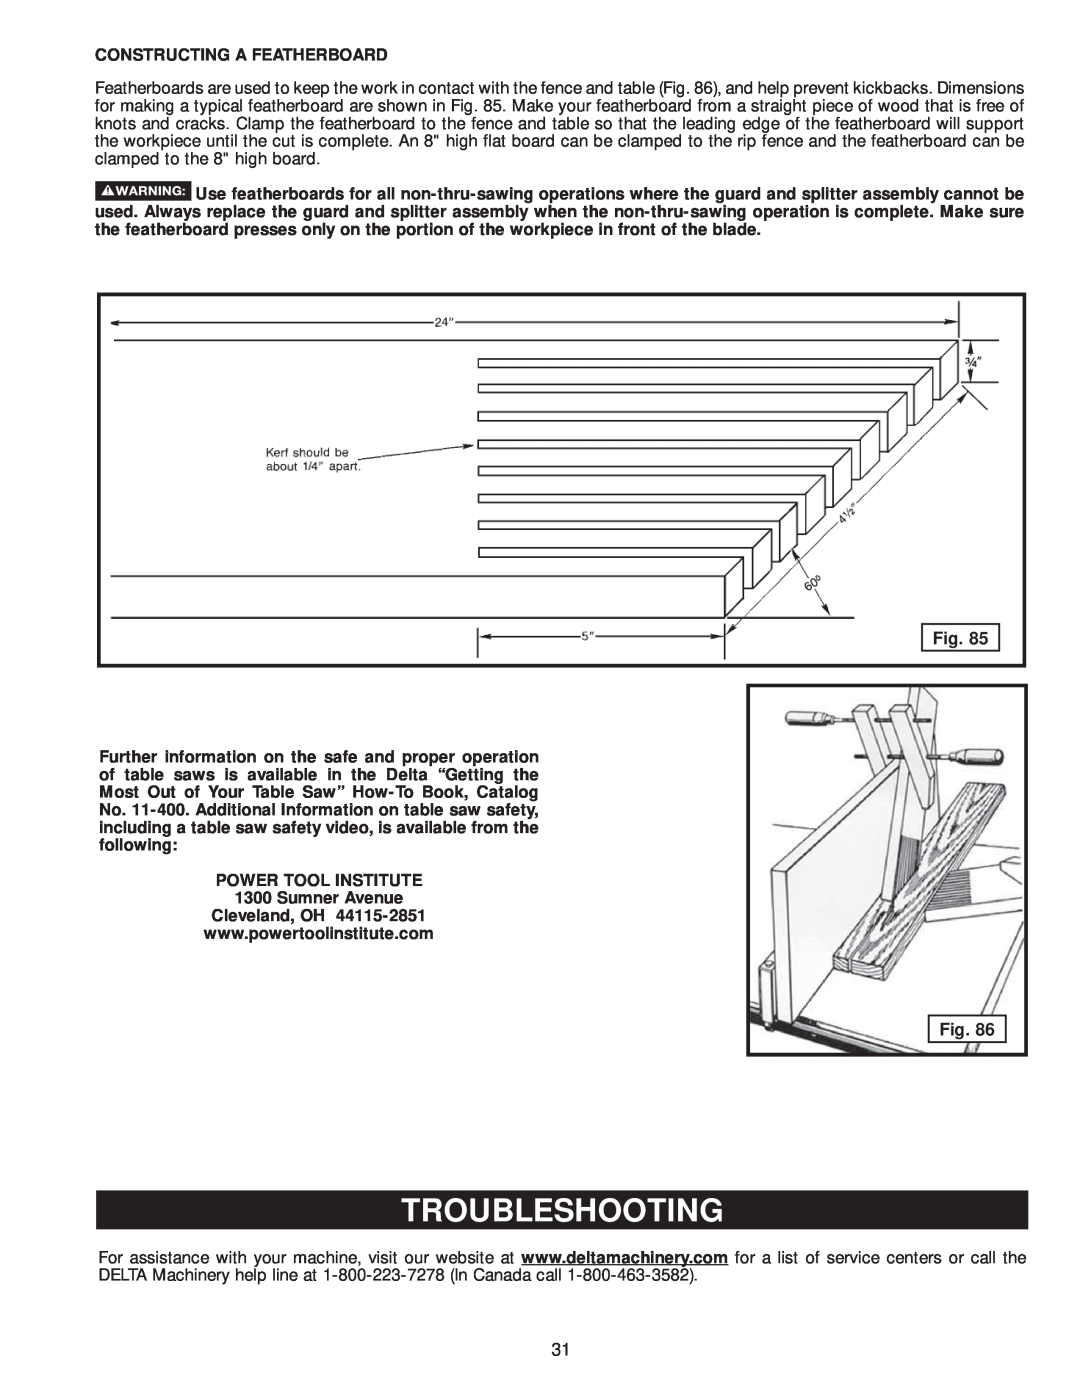 Delta 36-978, 36-979 instruction manual Troubleshooting 